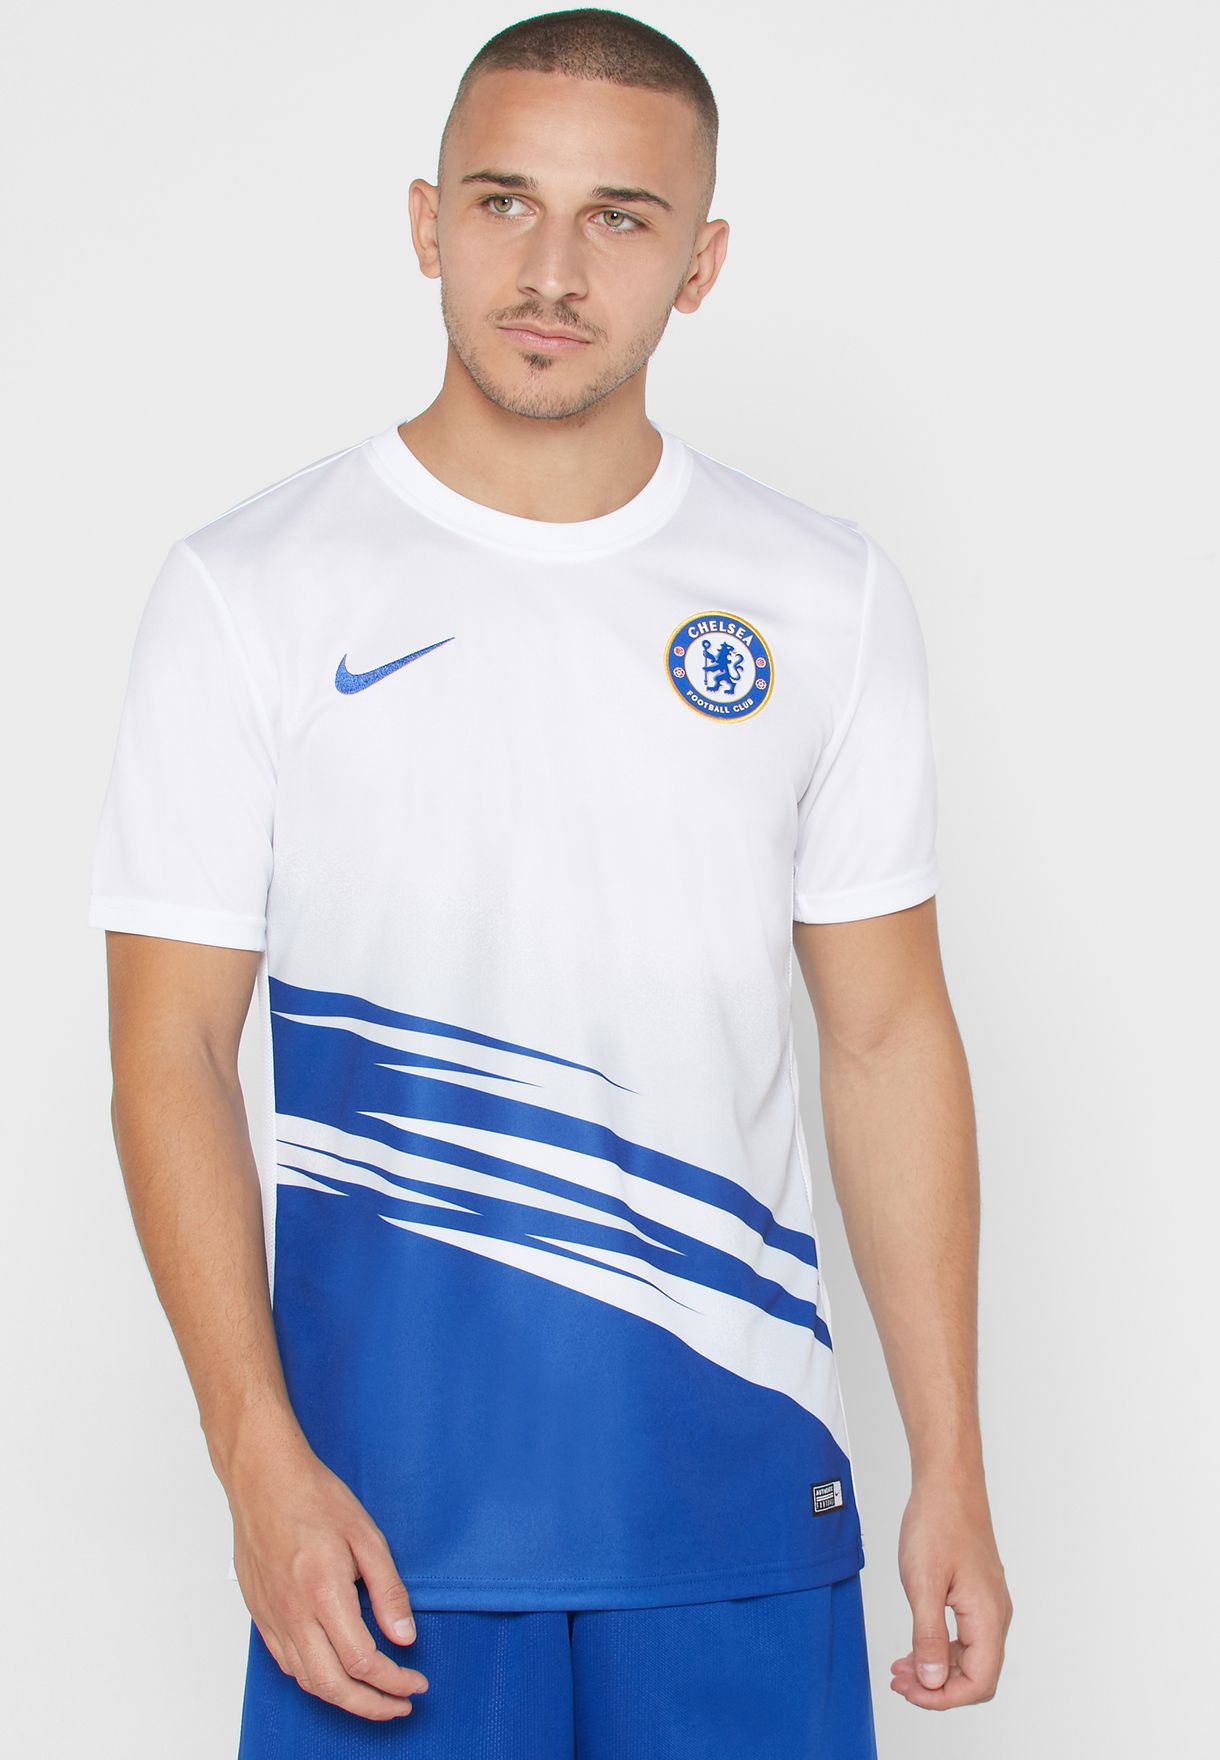 Chelsea T Shirt - Chelsea T Shirt Training Tracksuit 2020 2021 Blue / A ...